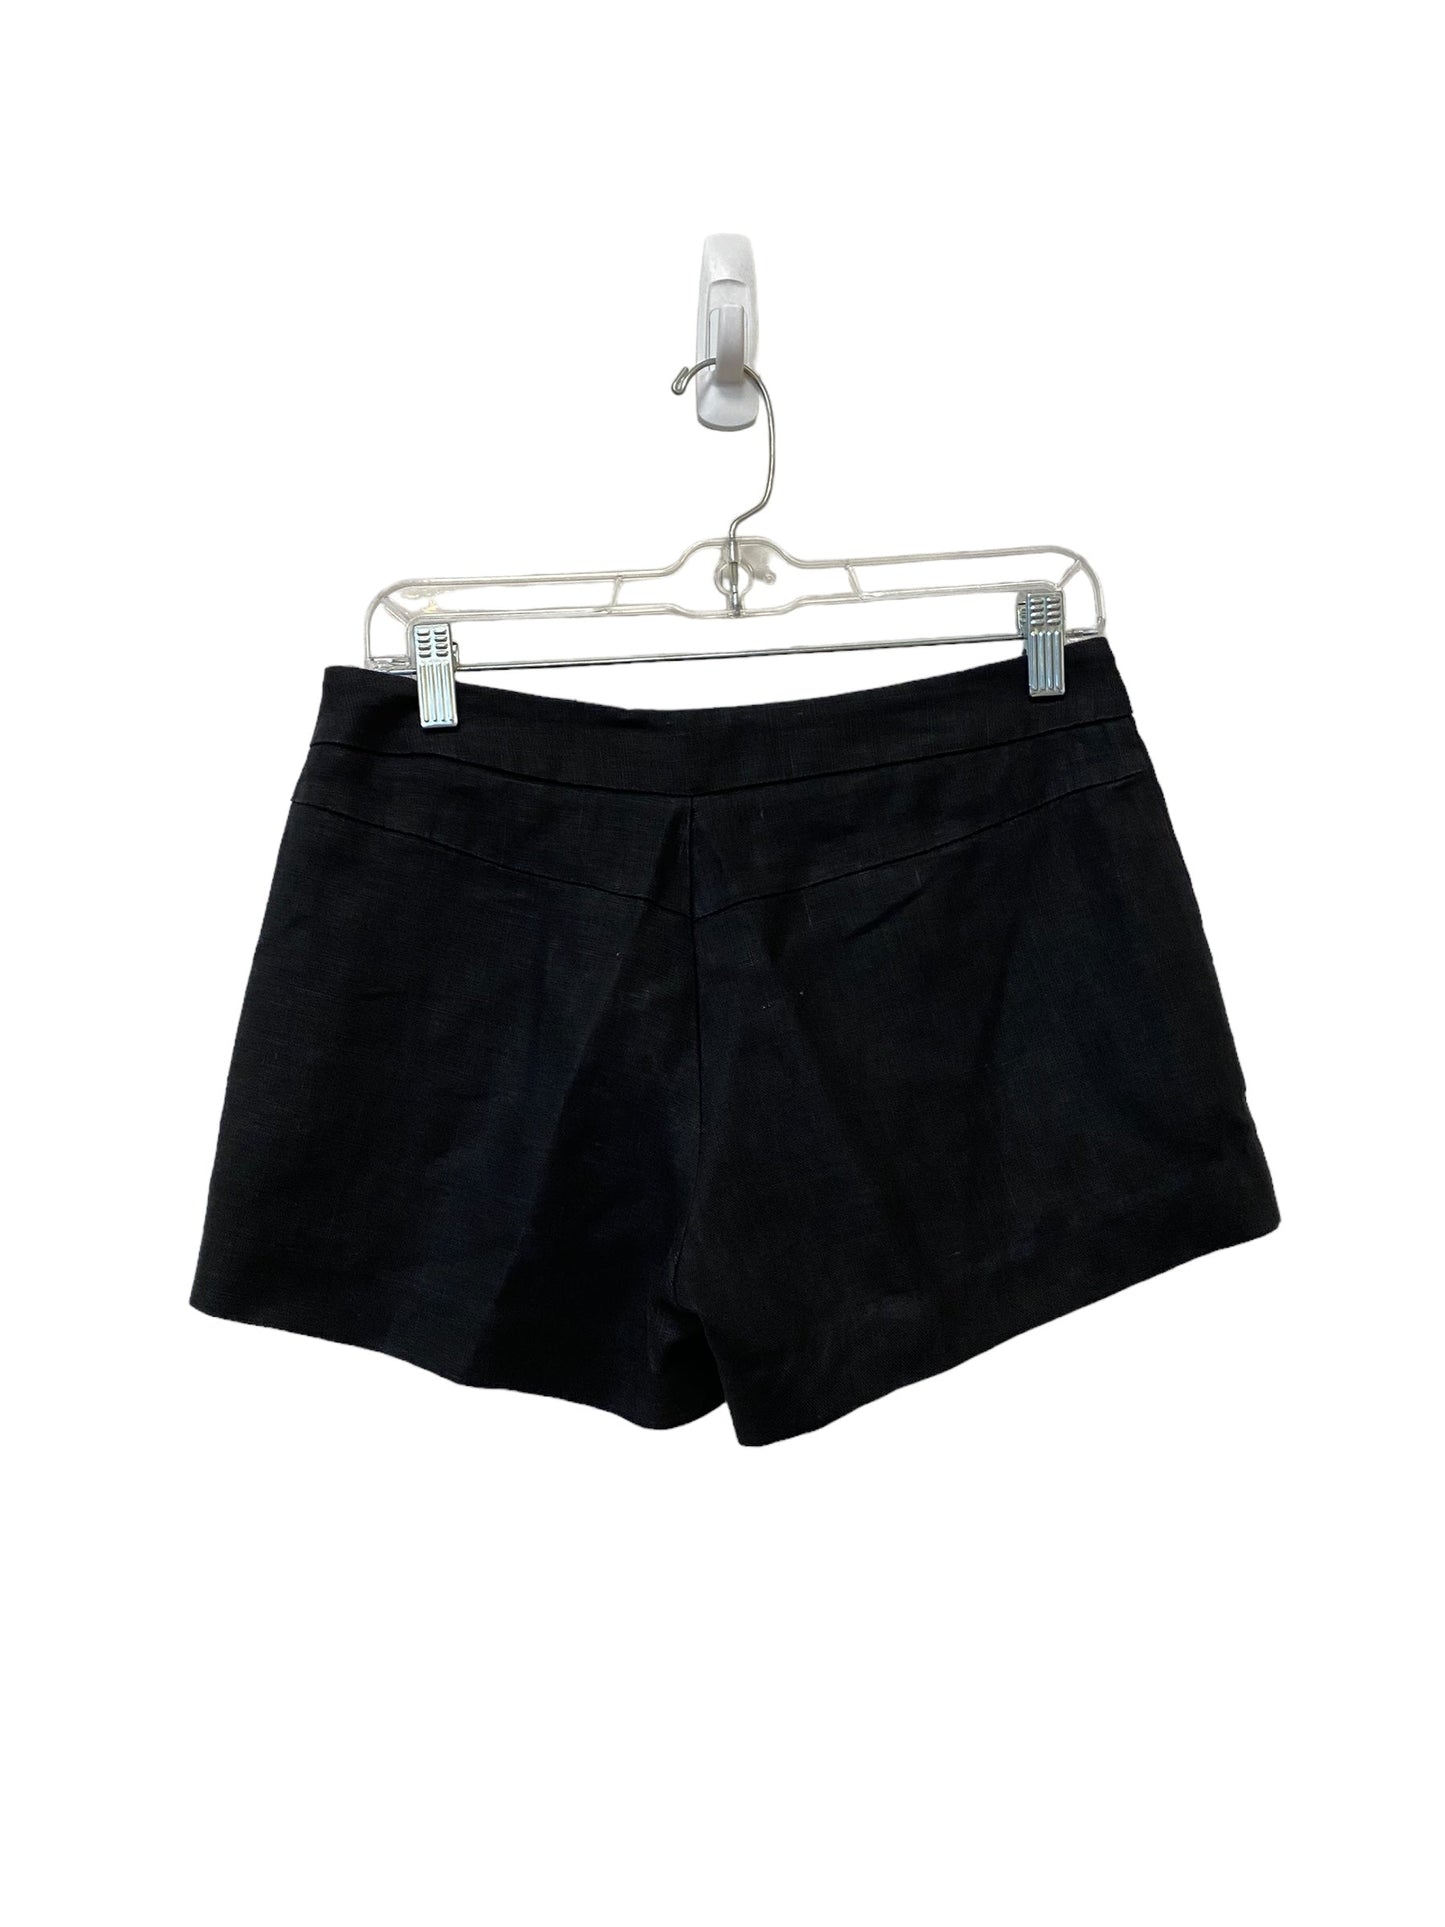 Black Shorts Joie, Size 2